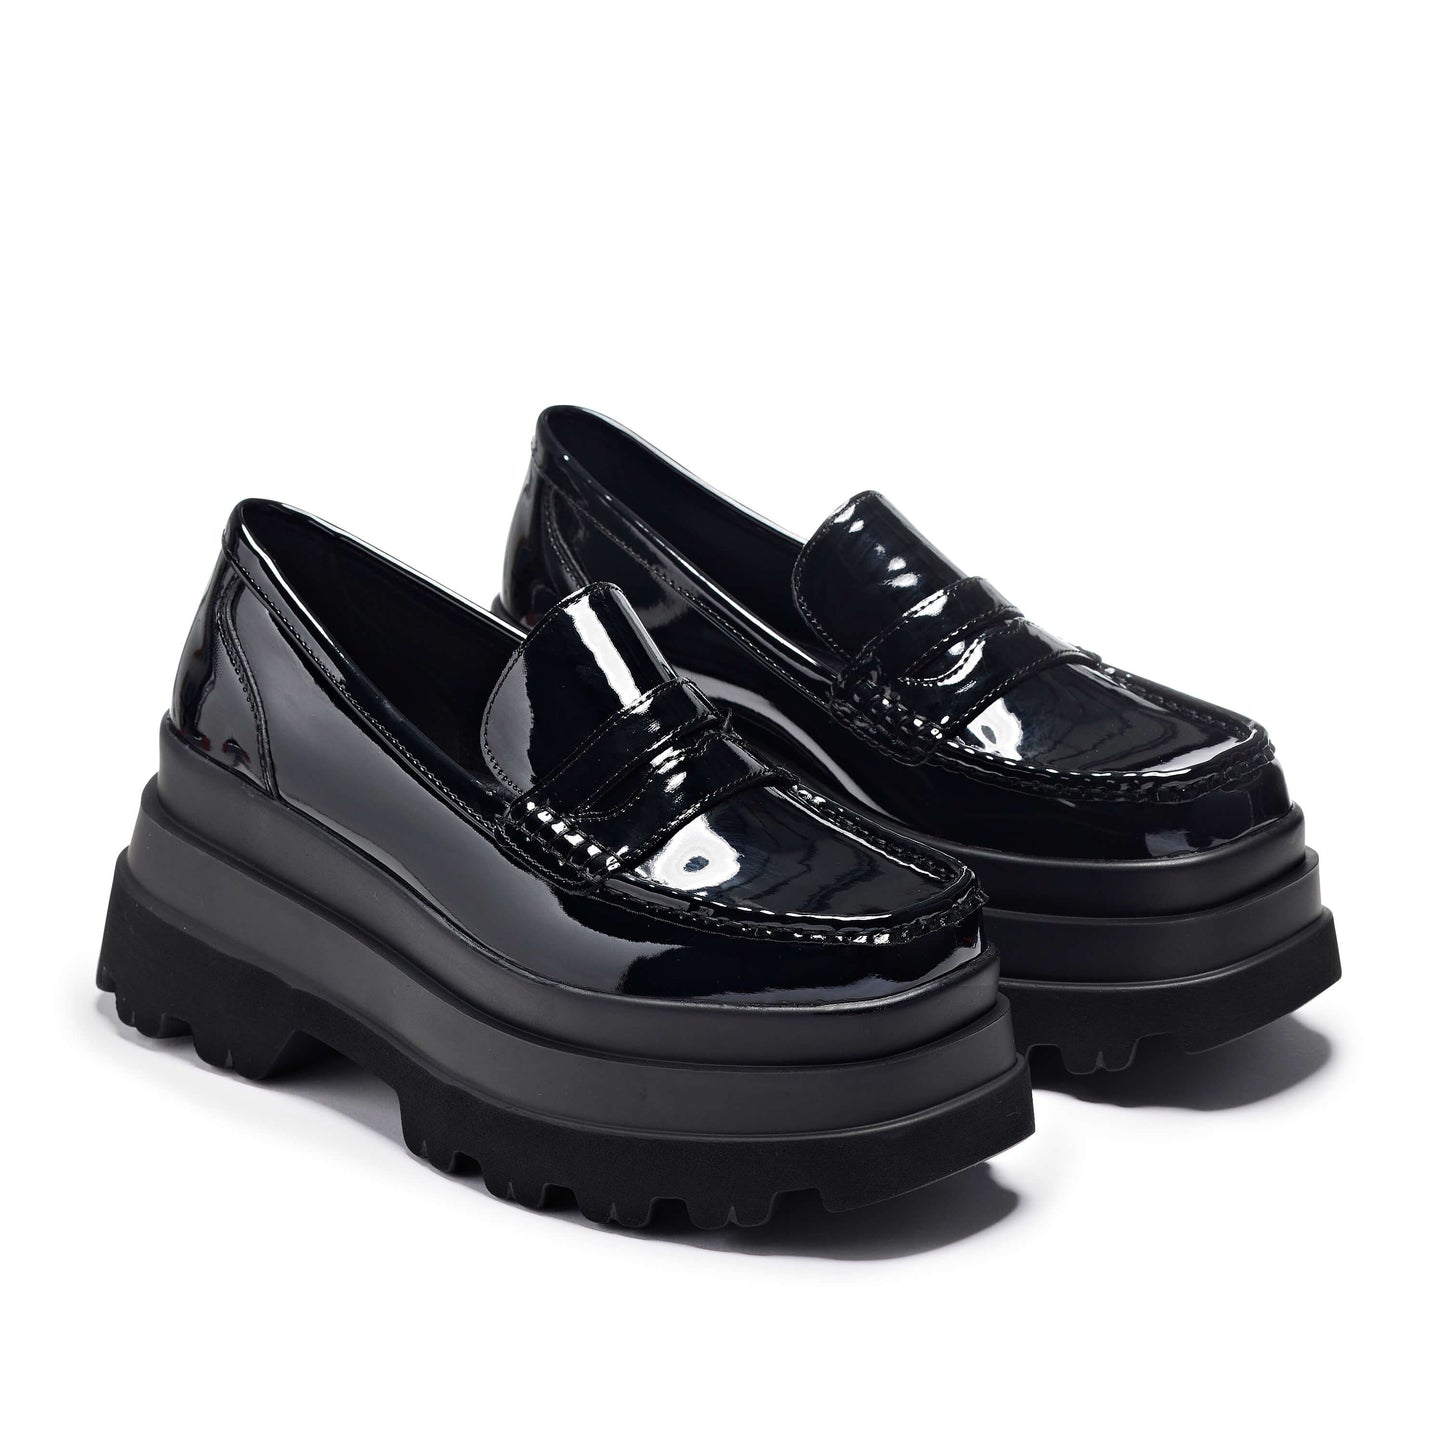 Arna Black Patent Trident Shoes - Shoes - KOI Footwear - Black - Three-Quarter View